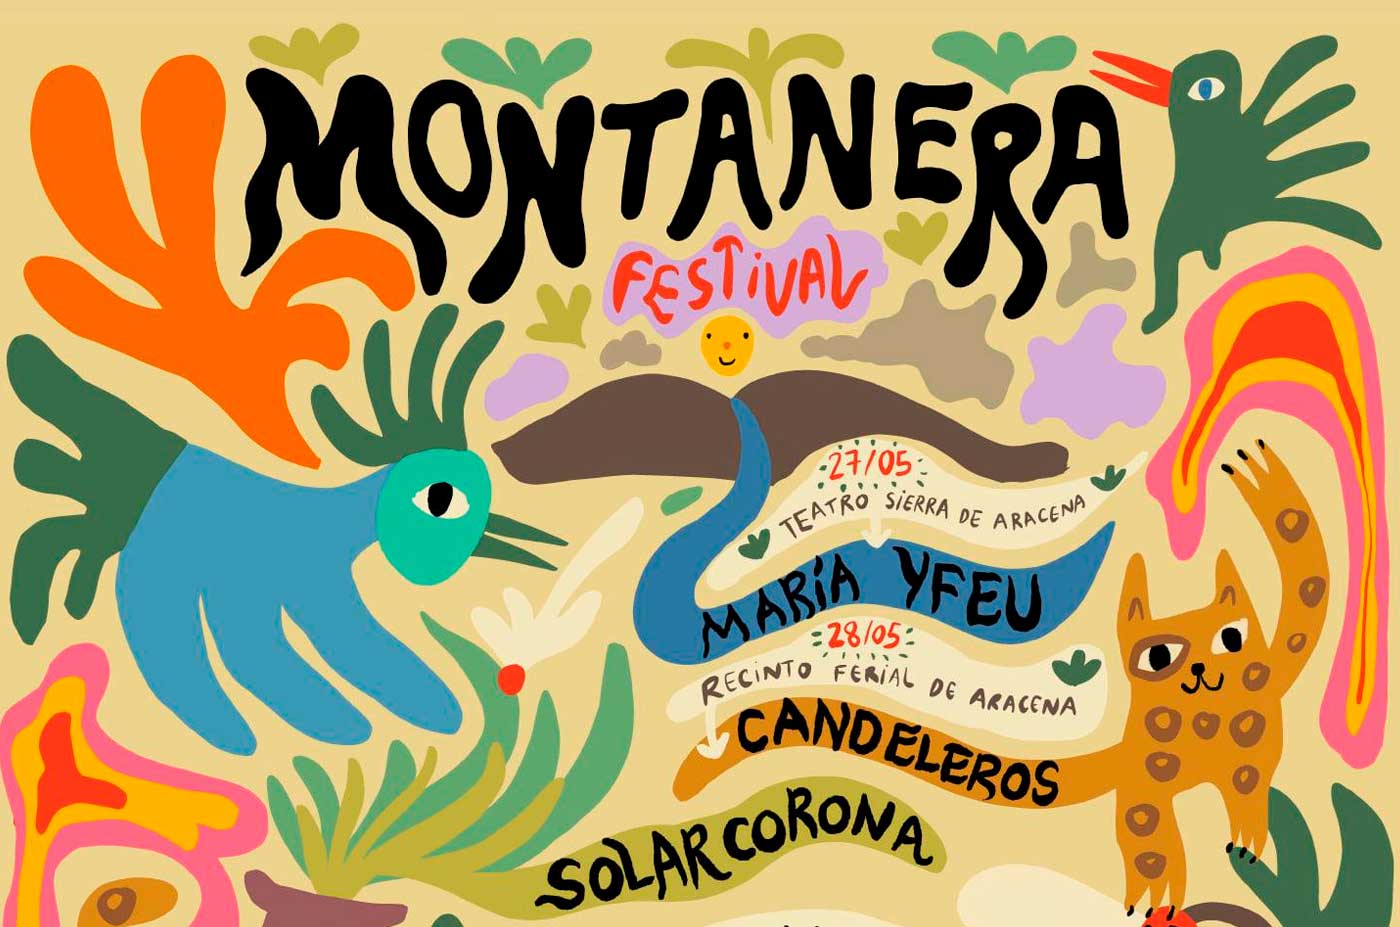 Montanera festival aracena 2022